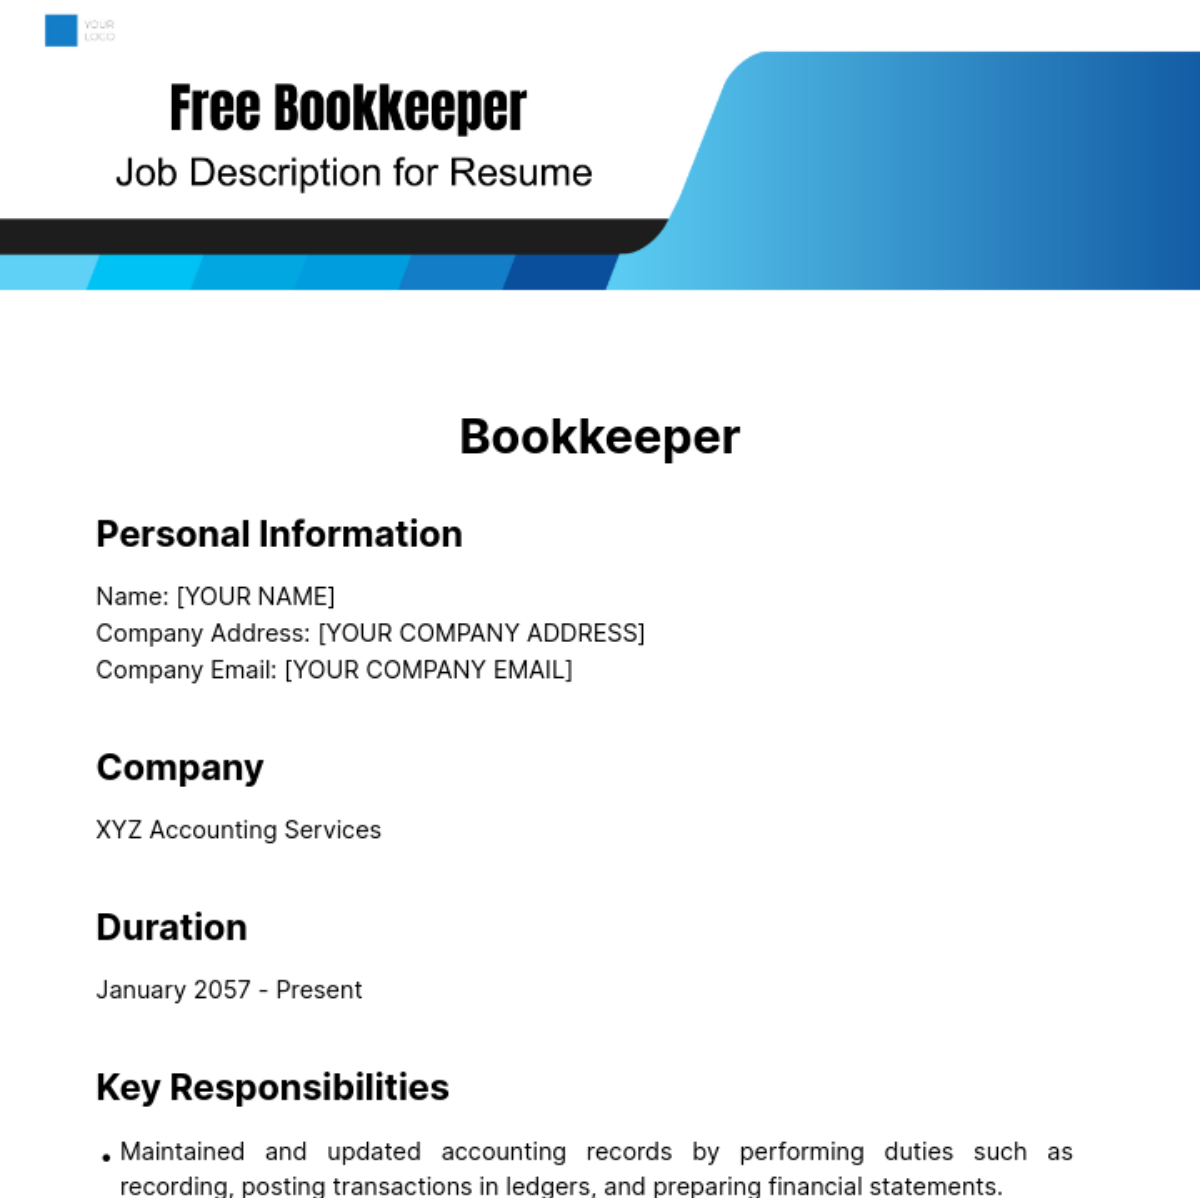 Free Bookkeeper Job Description for Resume Template